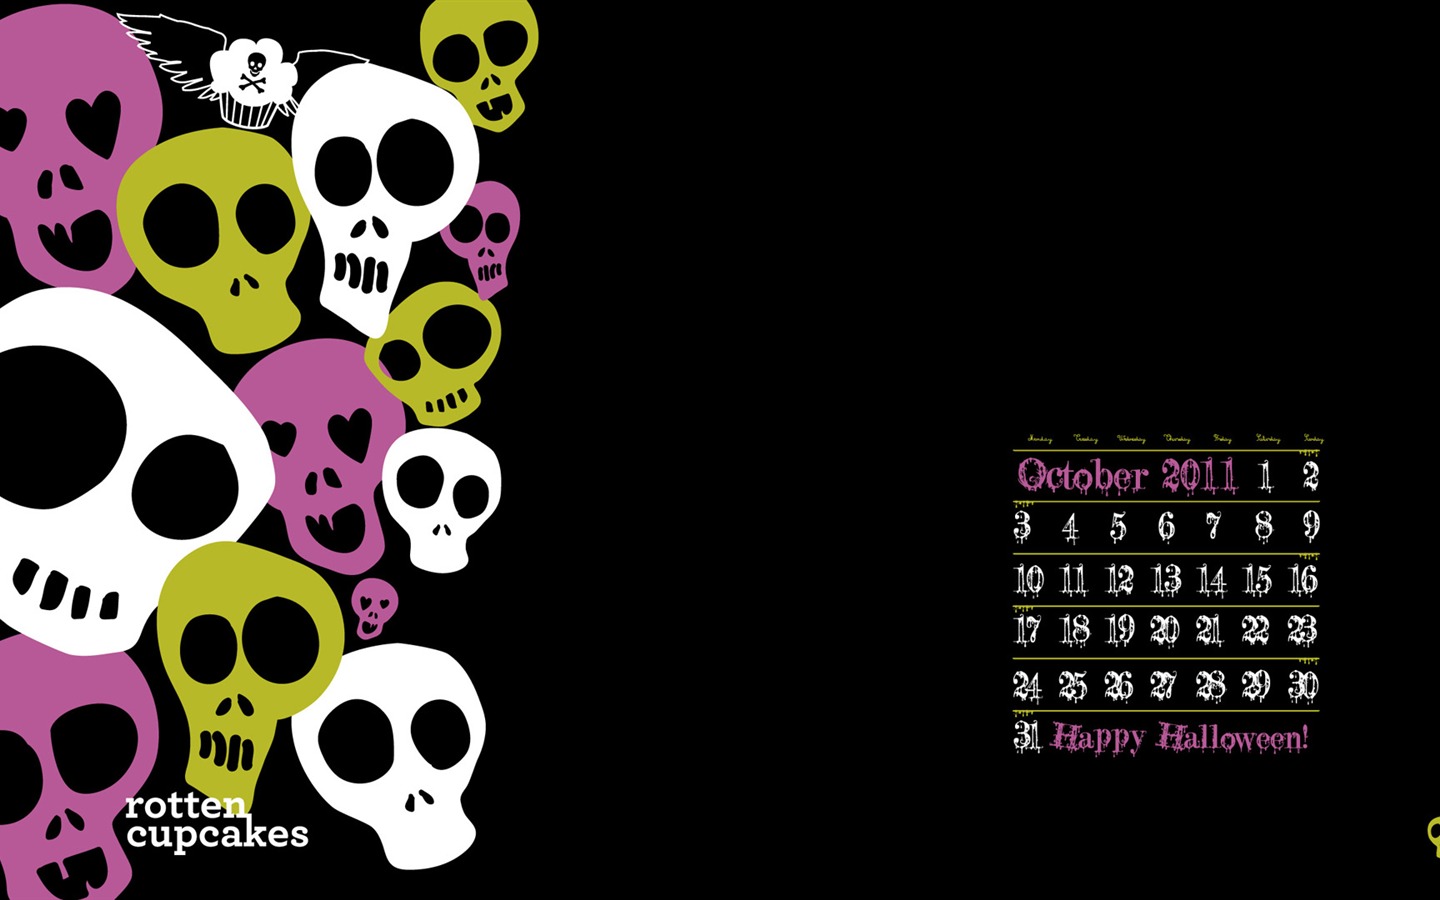 October 2011 Calendar Wallpaper (2) #14 - 1440x900